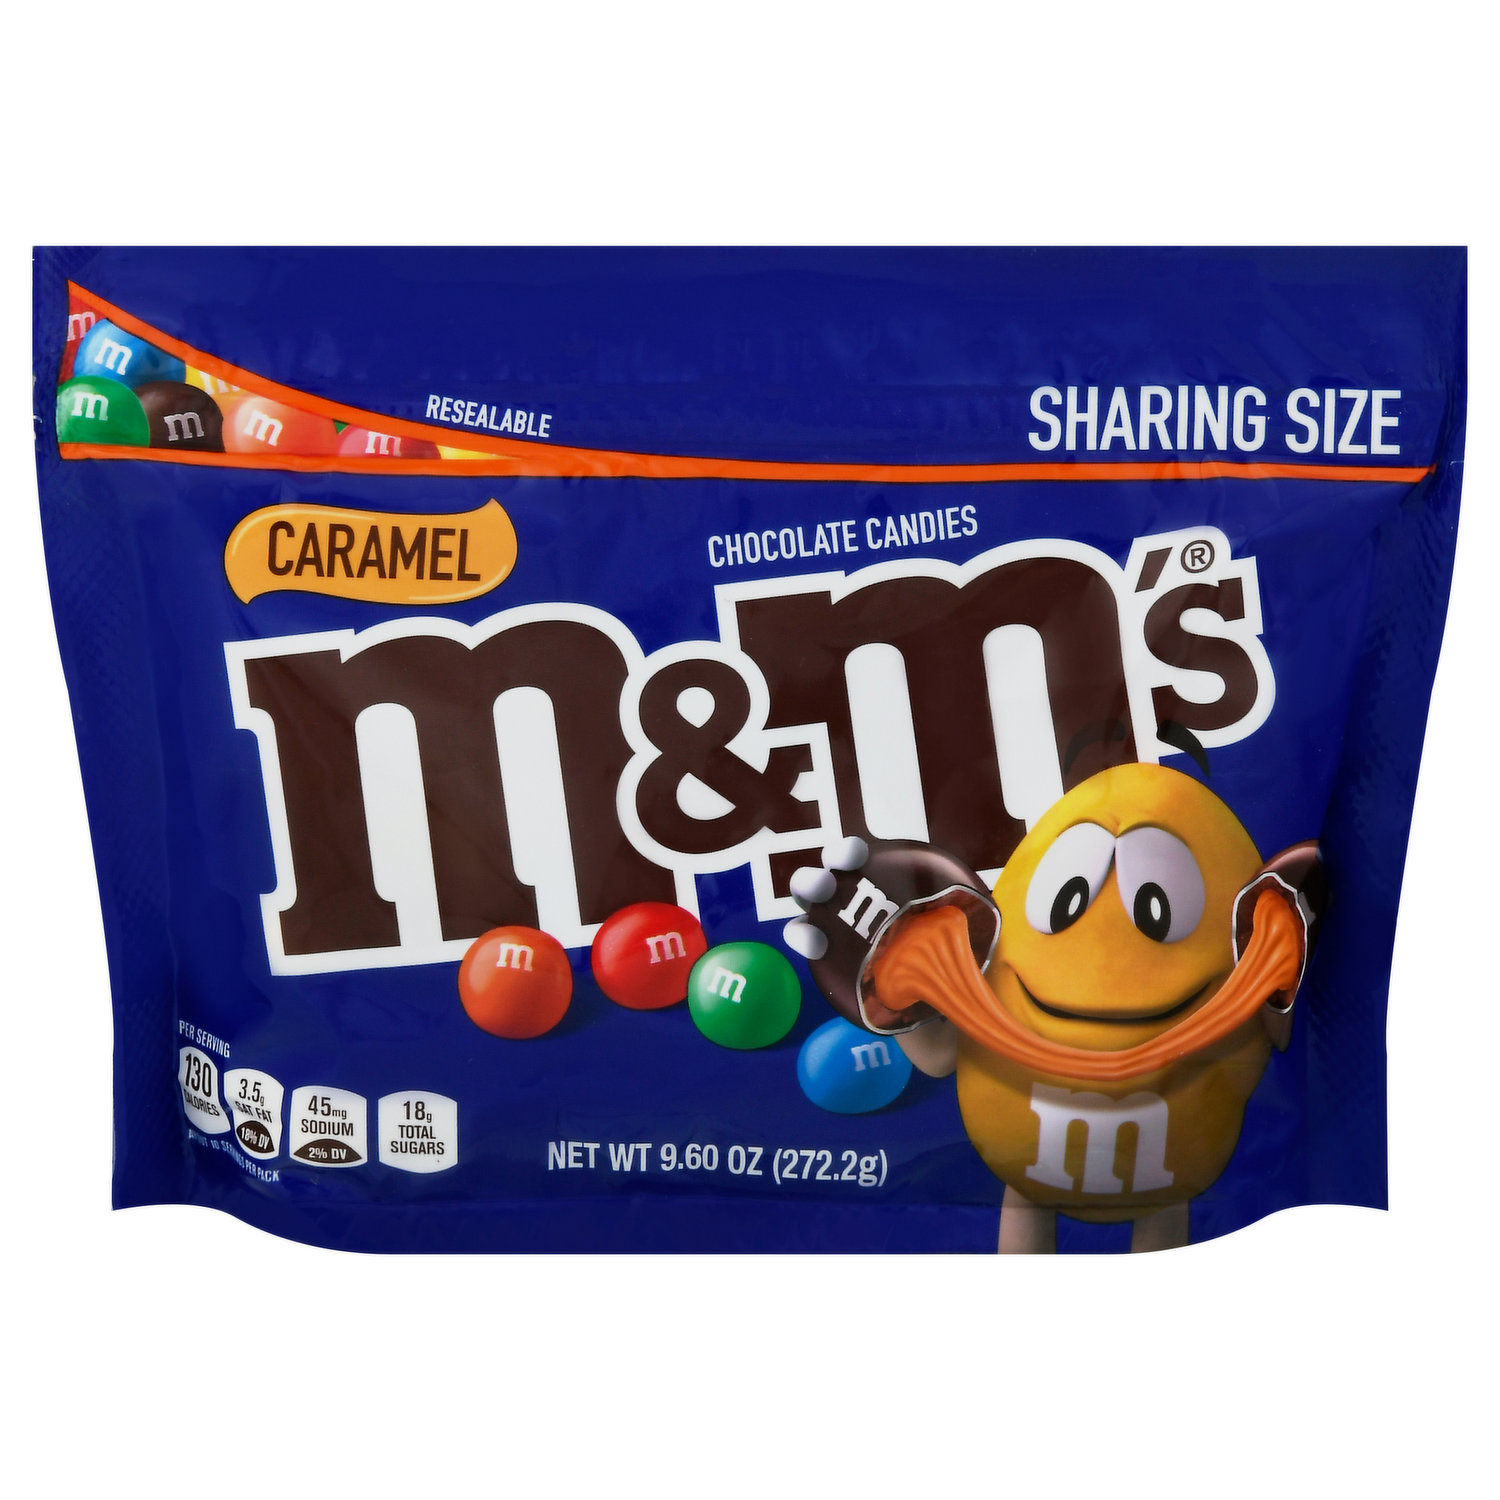 M&M's Fudge Brownie Chocolate Candies Sharing Size